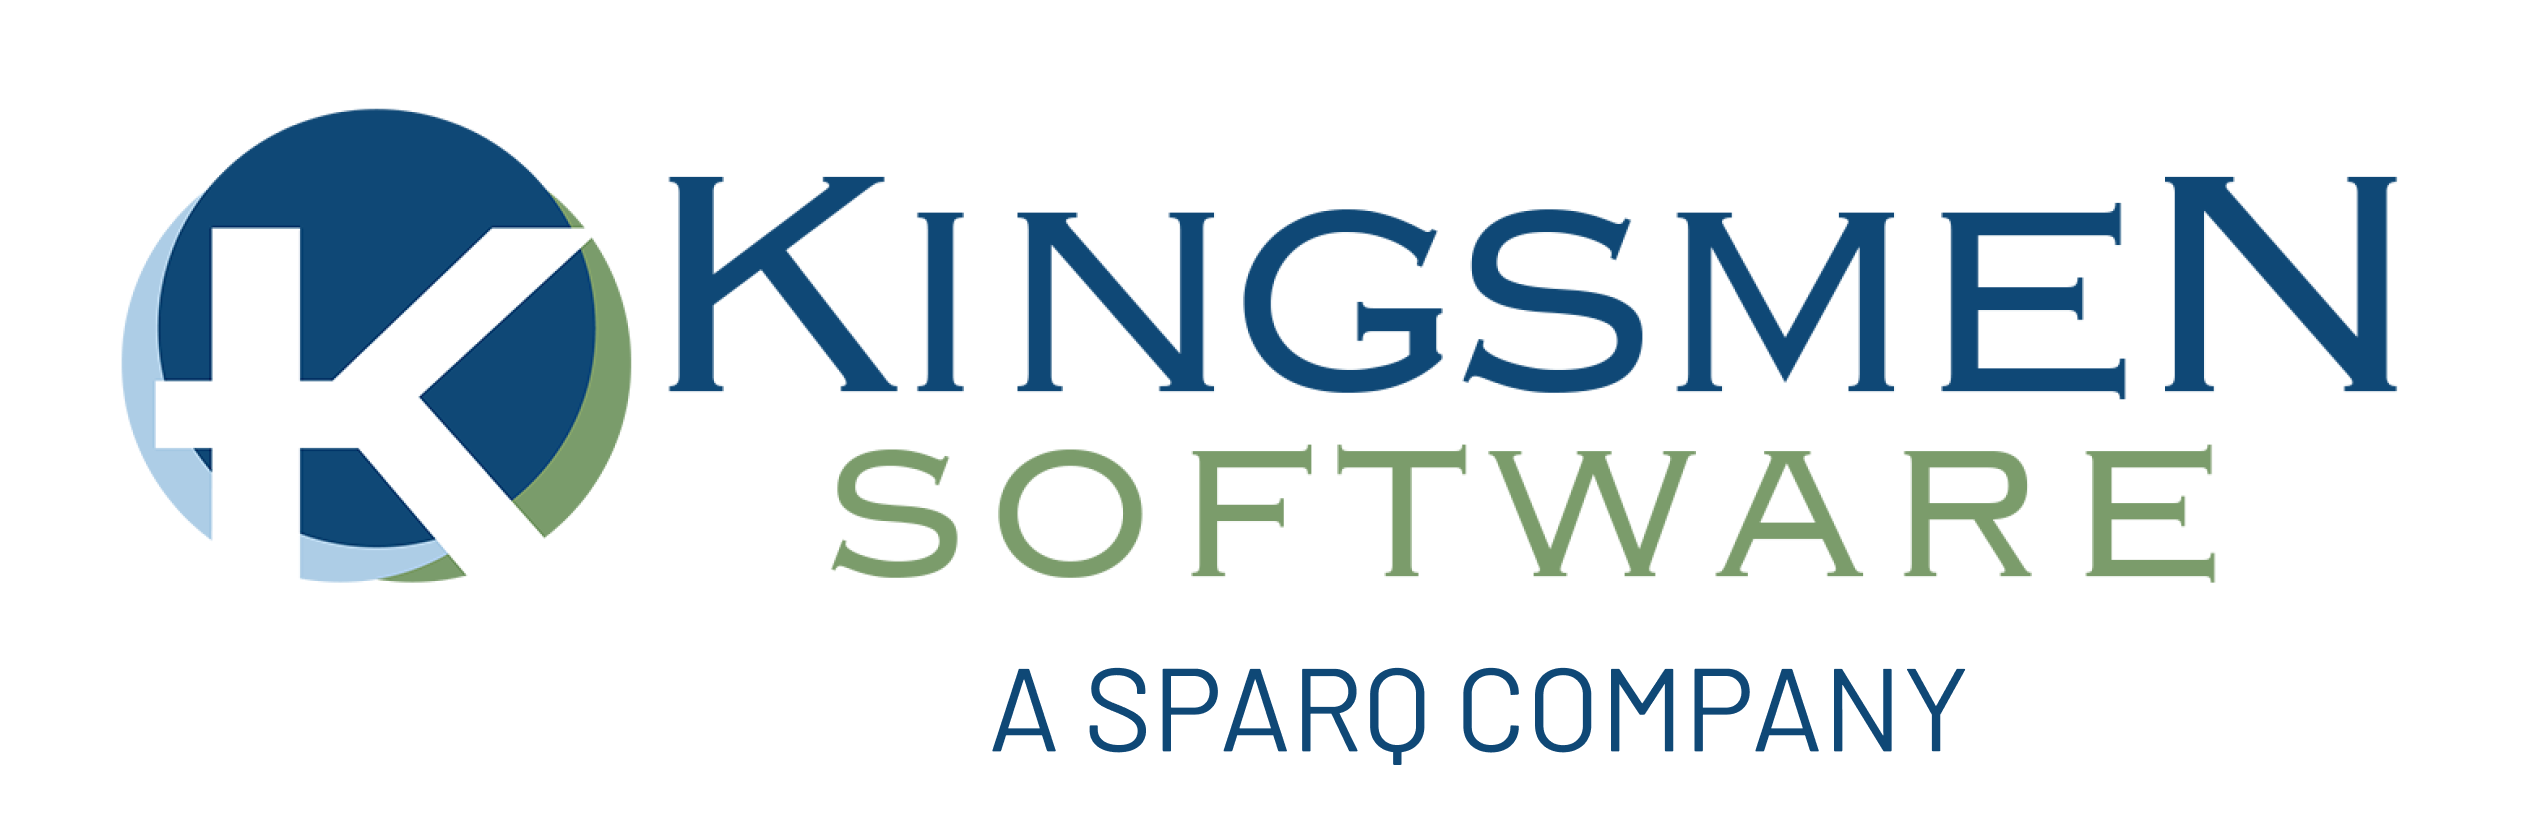 KingsmenSoftware_Sparq-transparent